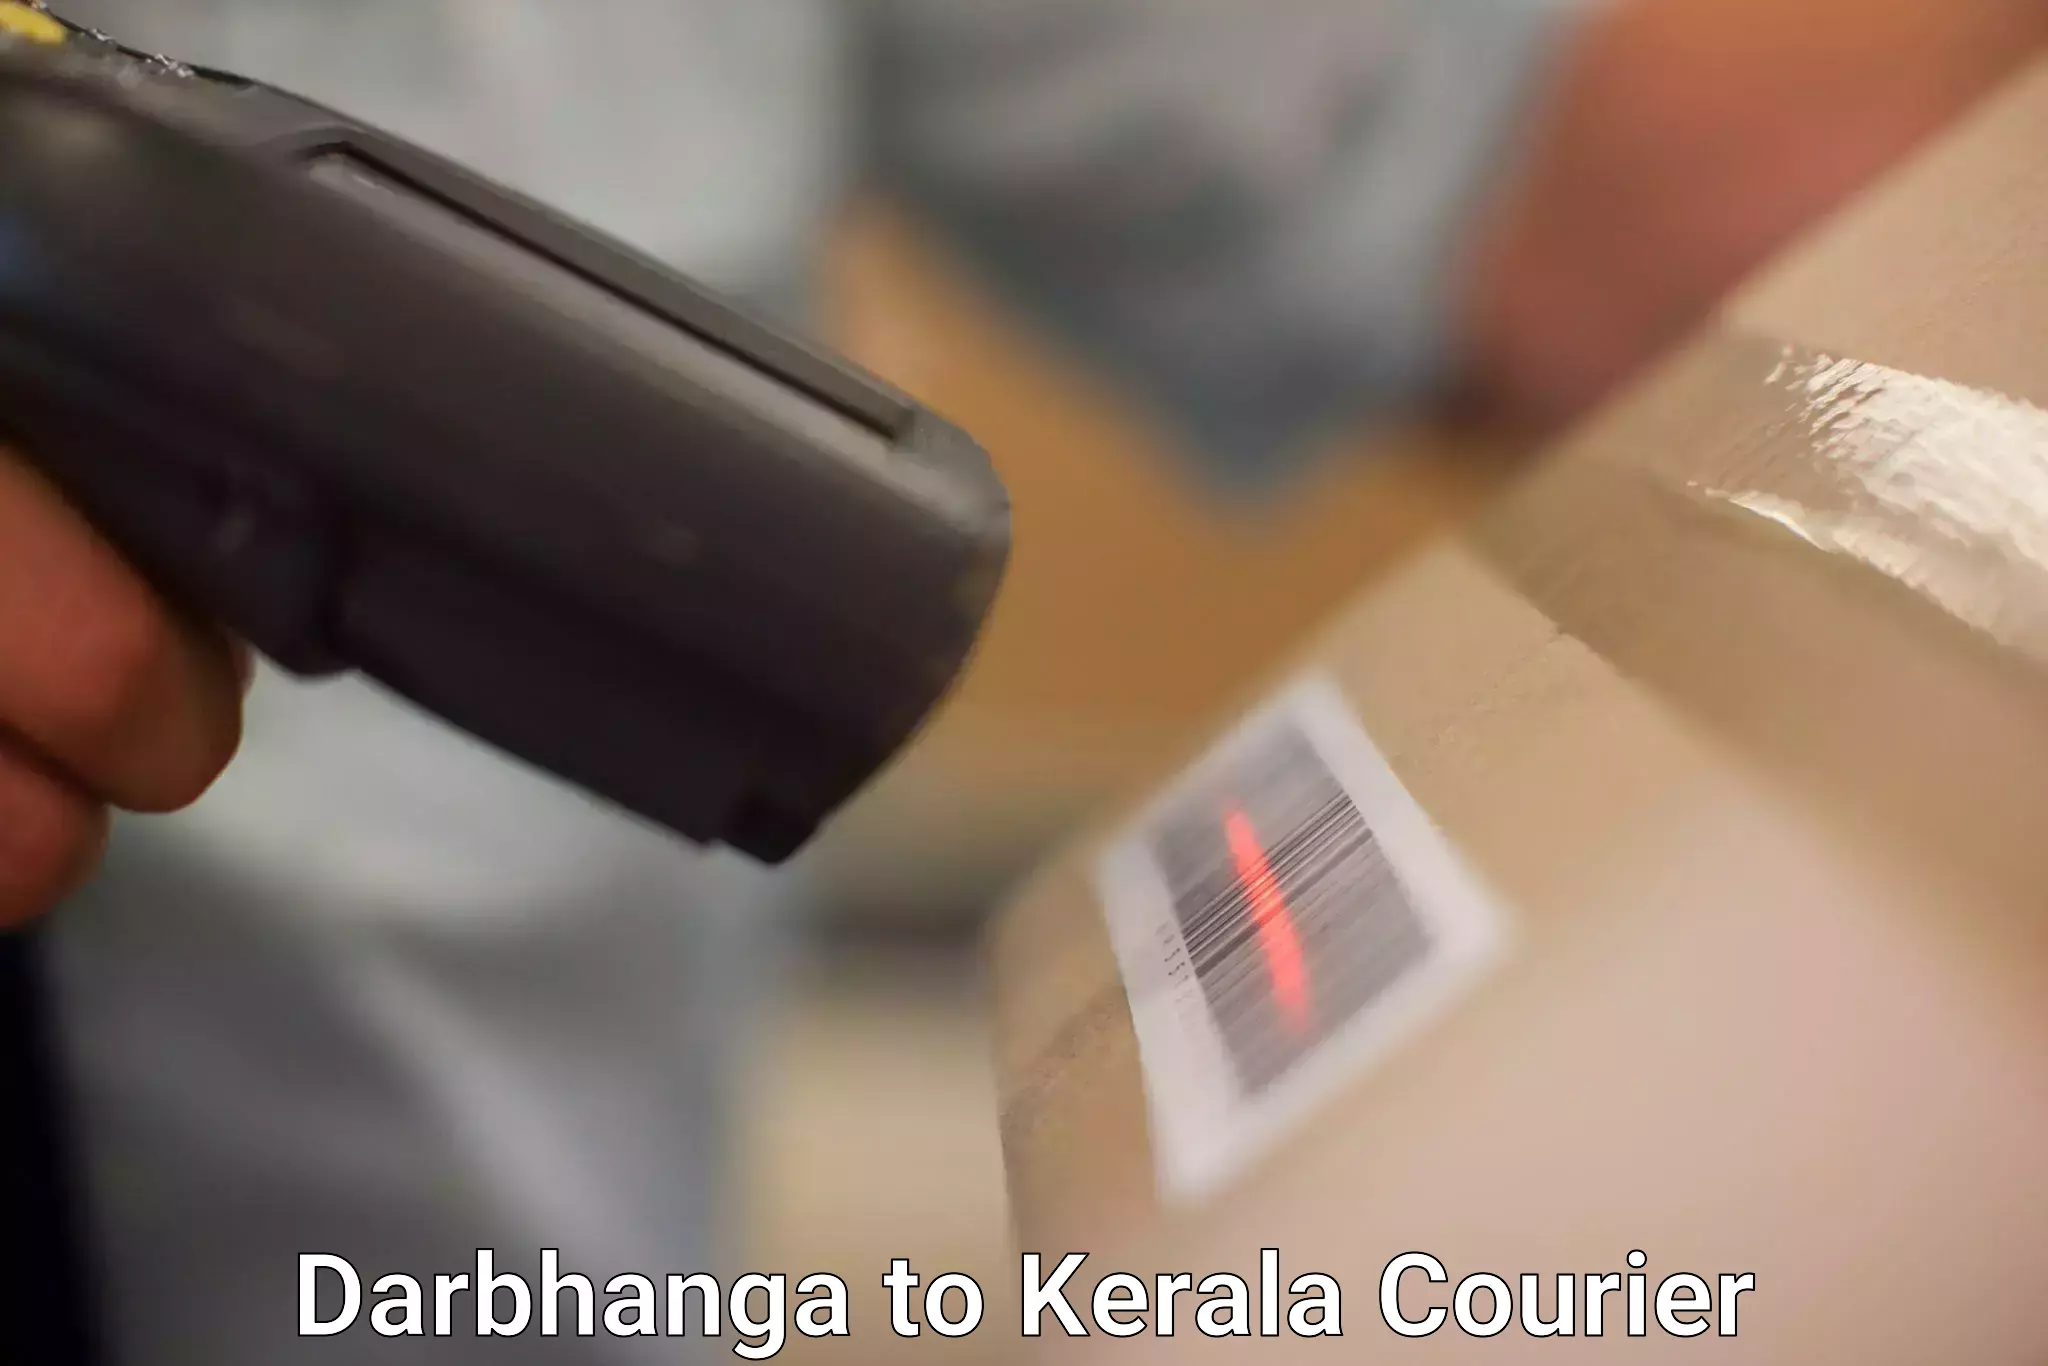 24-hour delivery options Darbhanga to Cochin Port Kochi